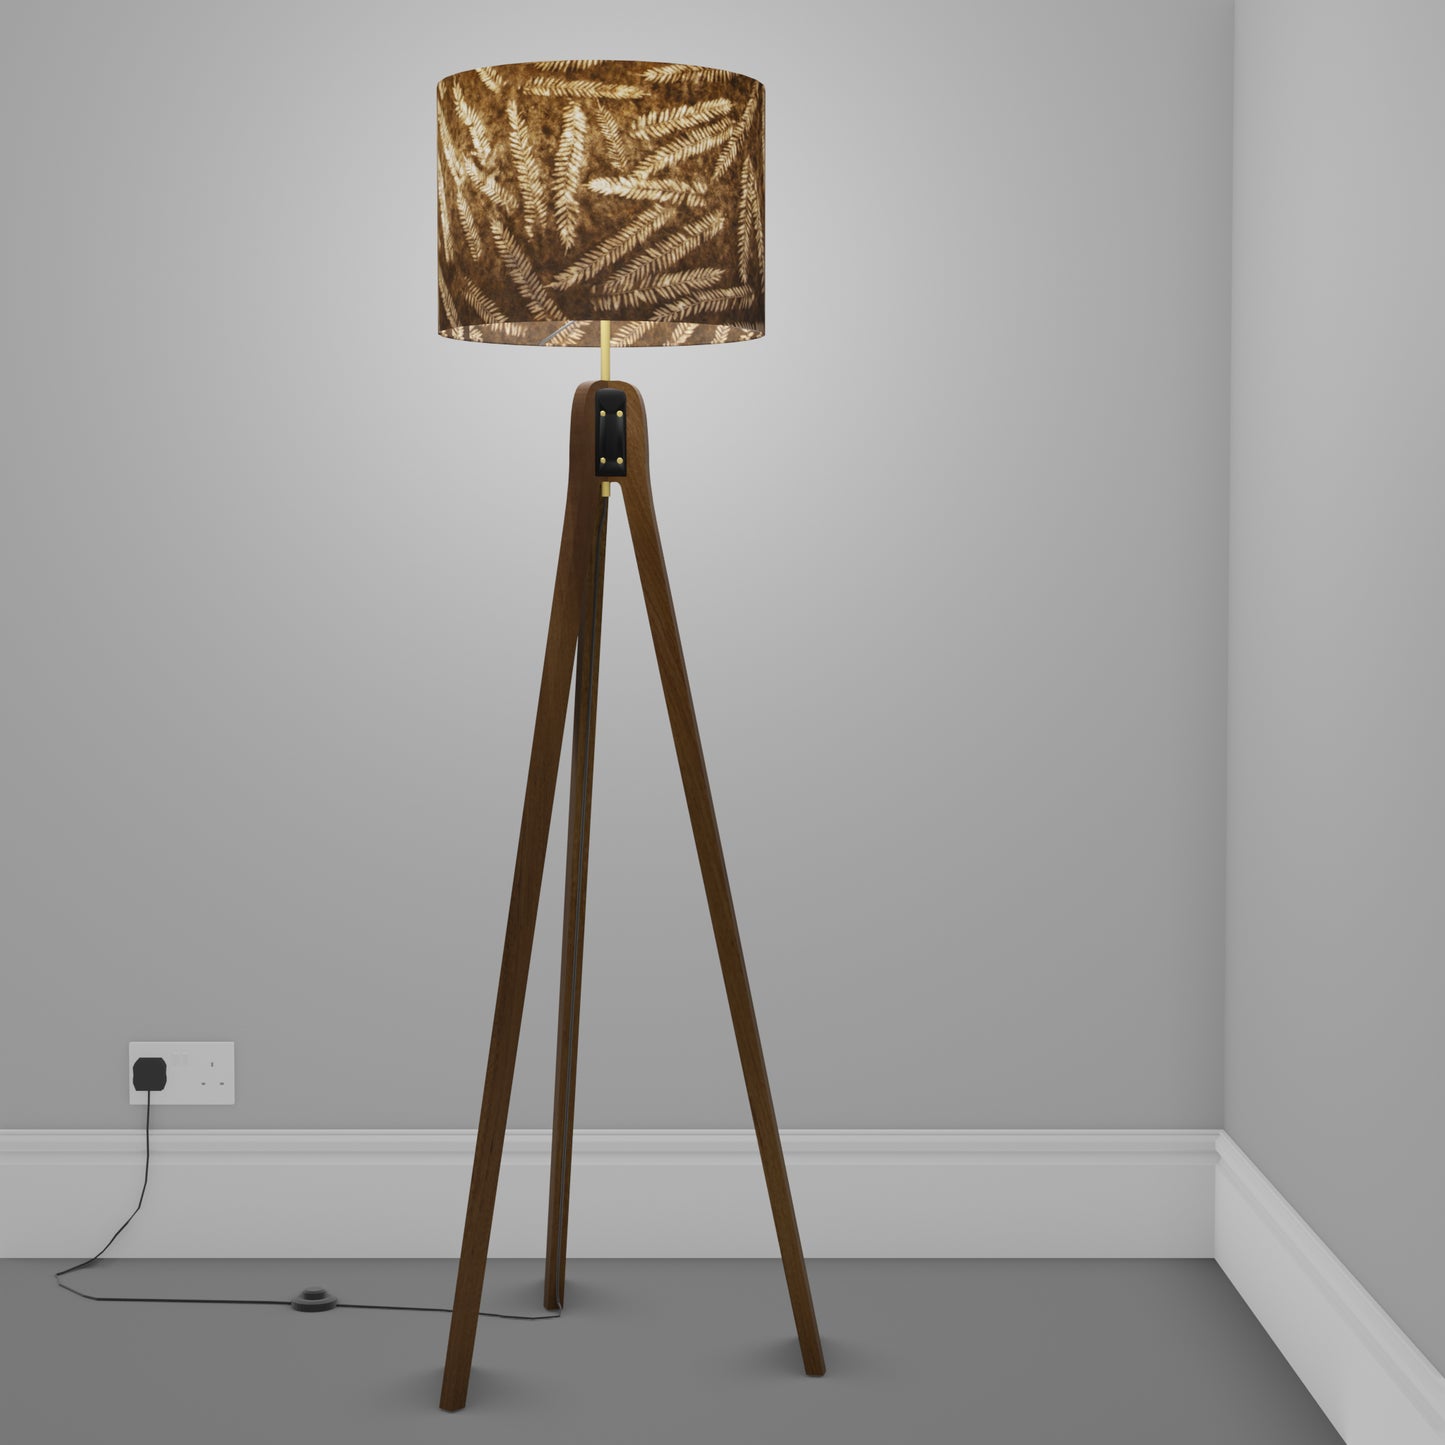 Sapele Tripod Floor Lamp - P26 - Resistance Dyed Brown Fern